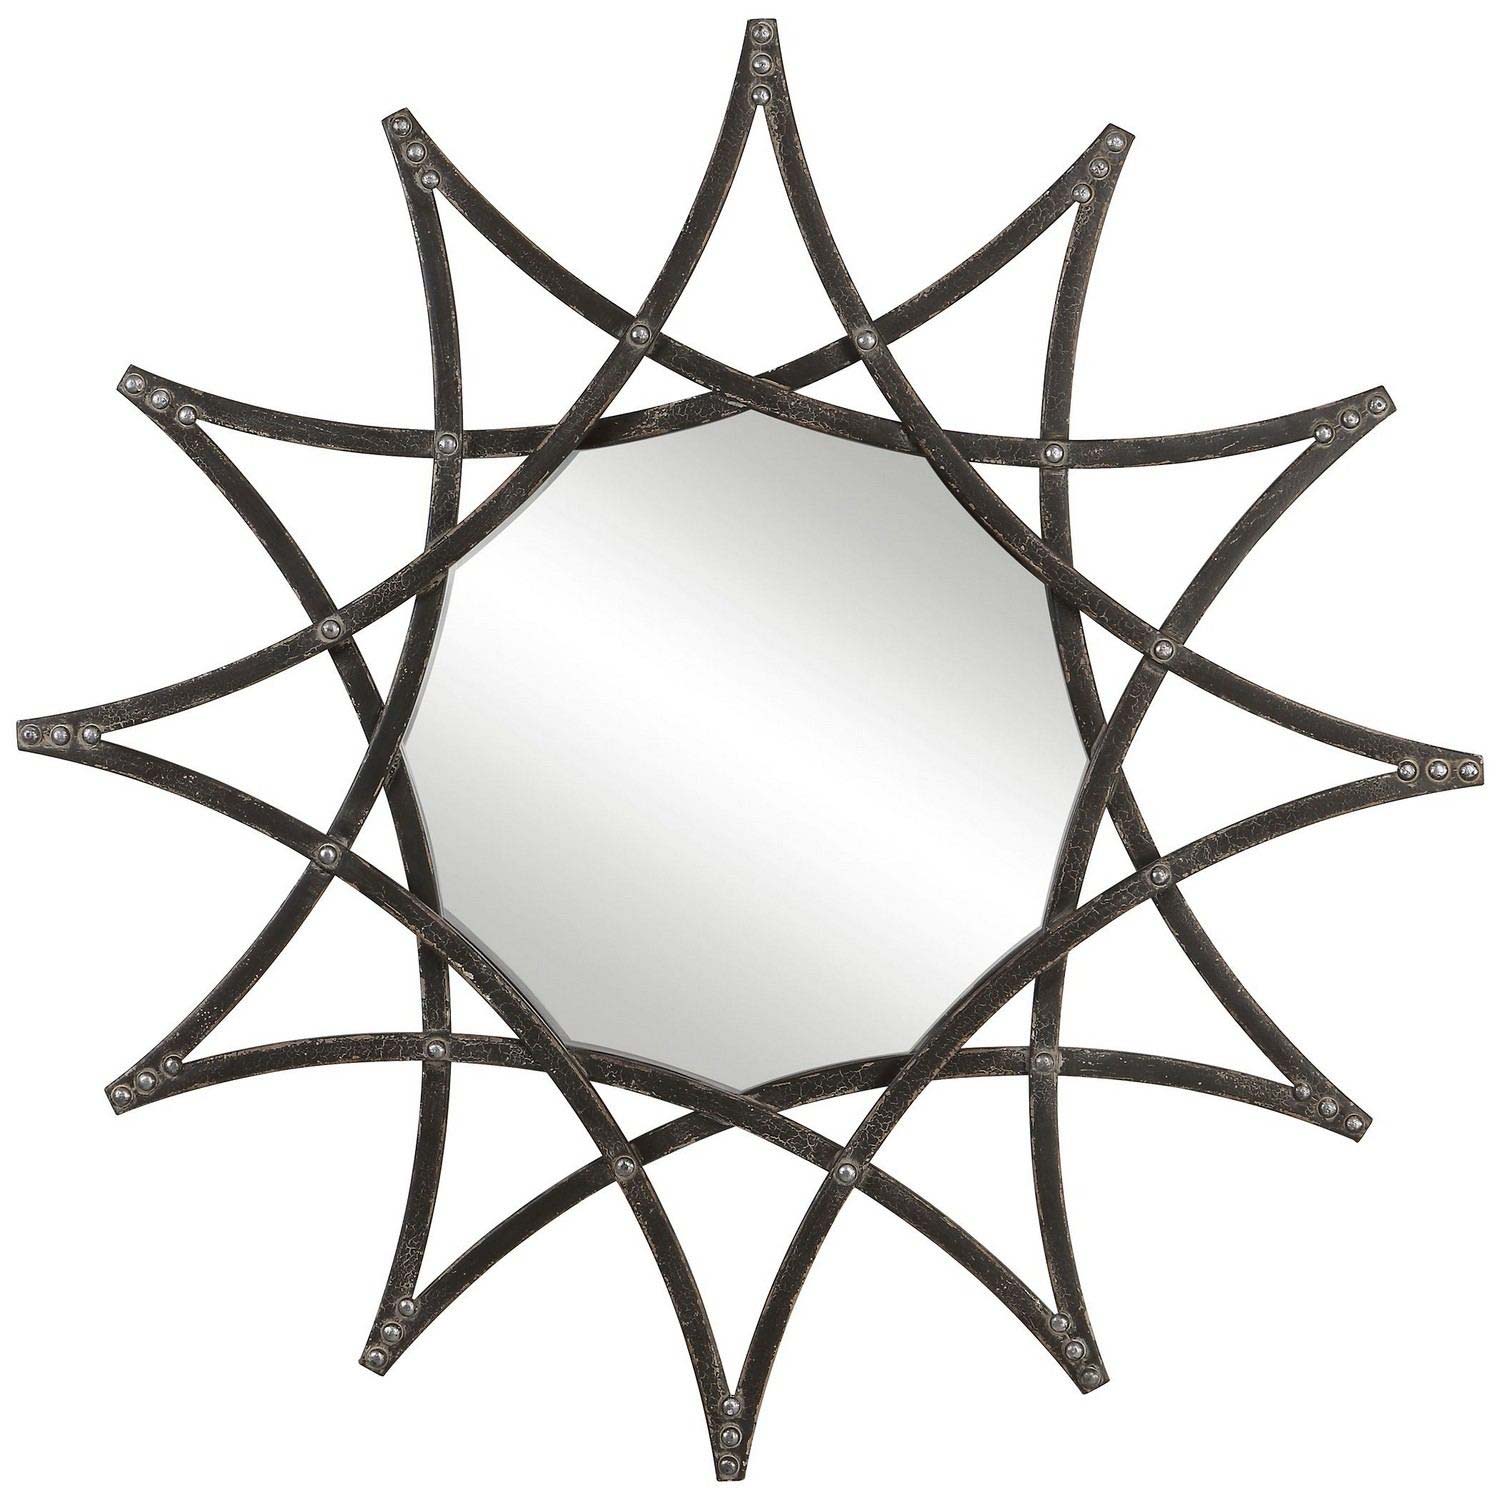 Uttermost Solaris Iron Star Mirror